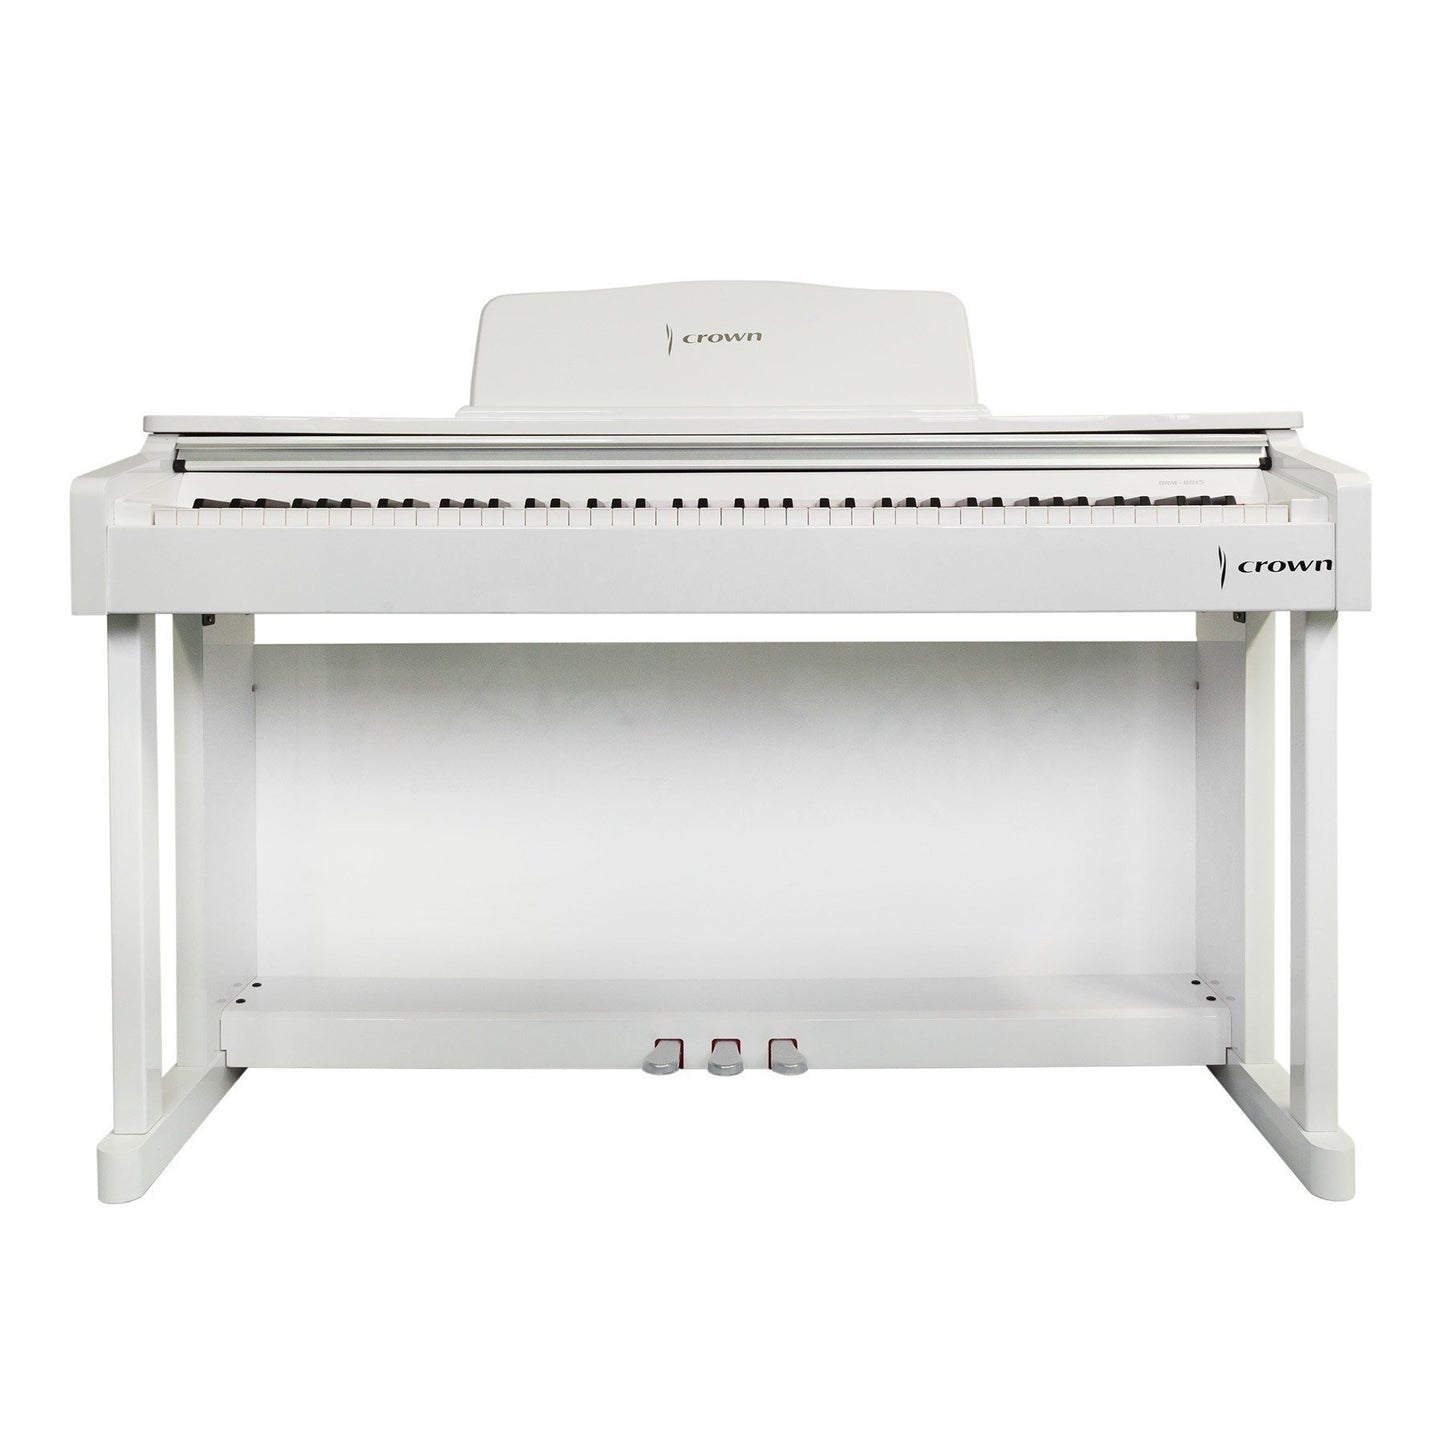 Crown 88-Key Hammer Action Digital Piano (White Gloss)